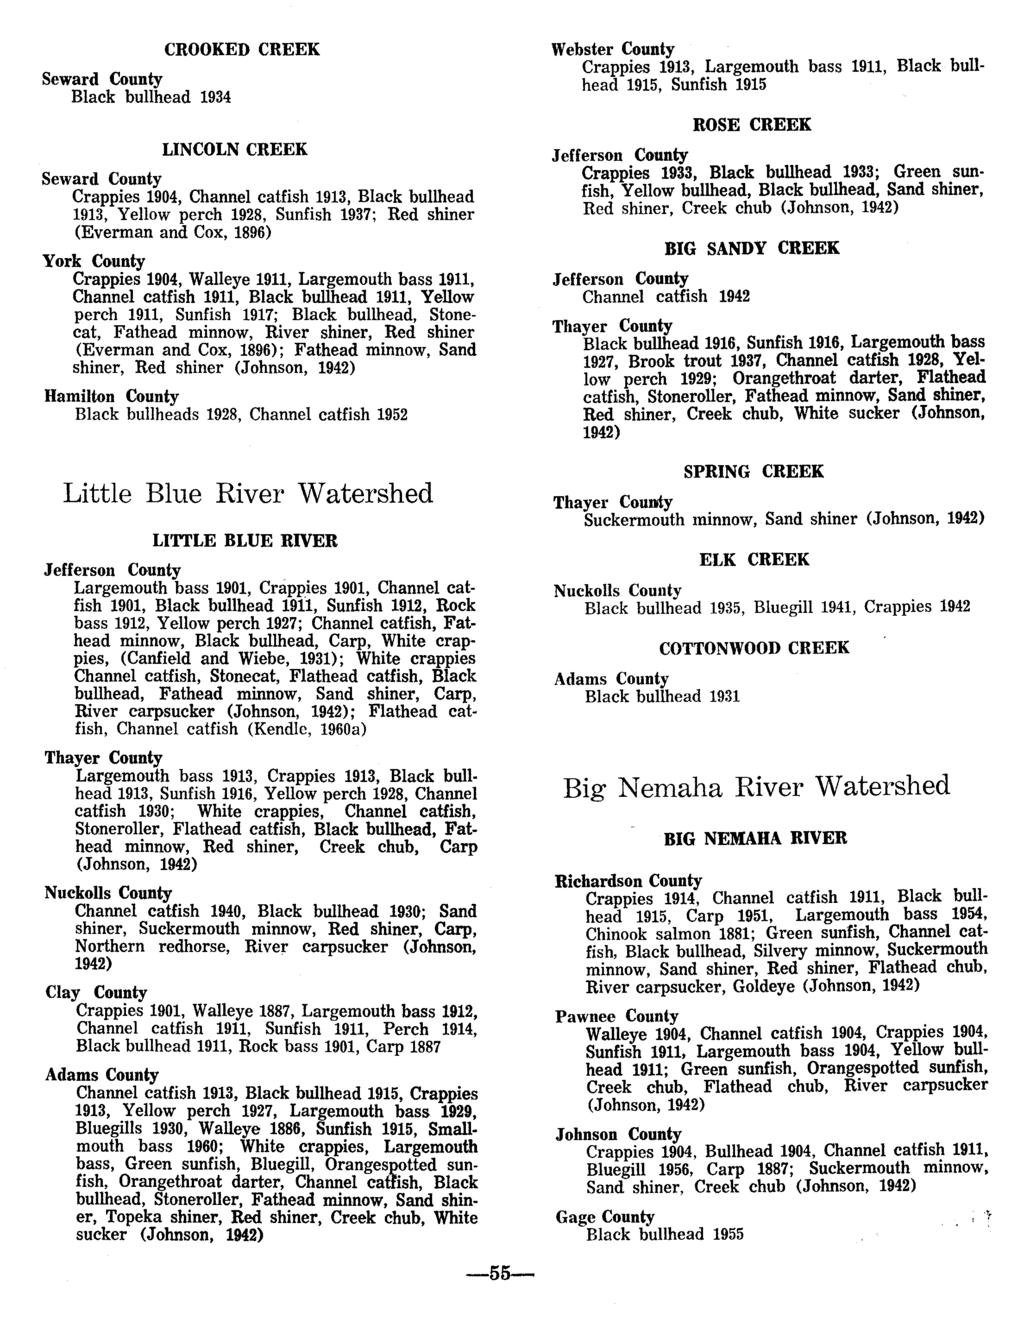 Seward County Black bullhead 1934 CROOKED CREEK LINCOLN CREEK Seward County Crappies 1904, Channel catfish 1913, Black bullhead 1913, Yellow perch 1928, Sunfish 1937; Red shiner (Everman and Cox,